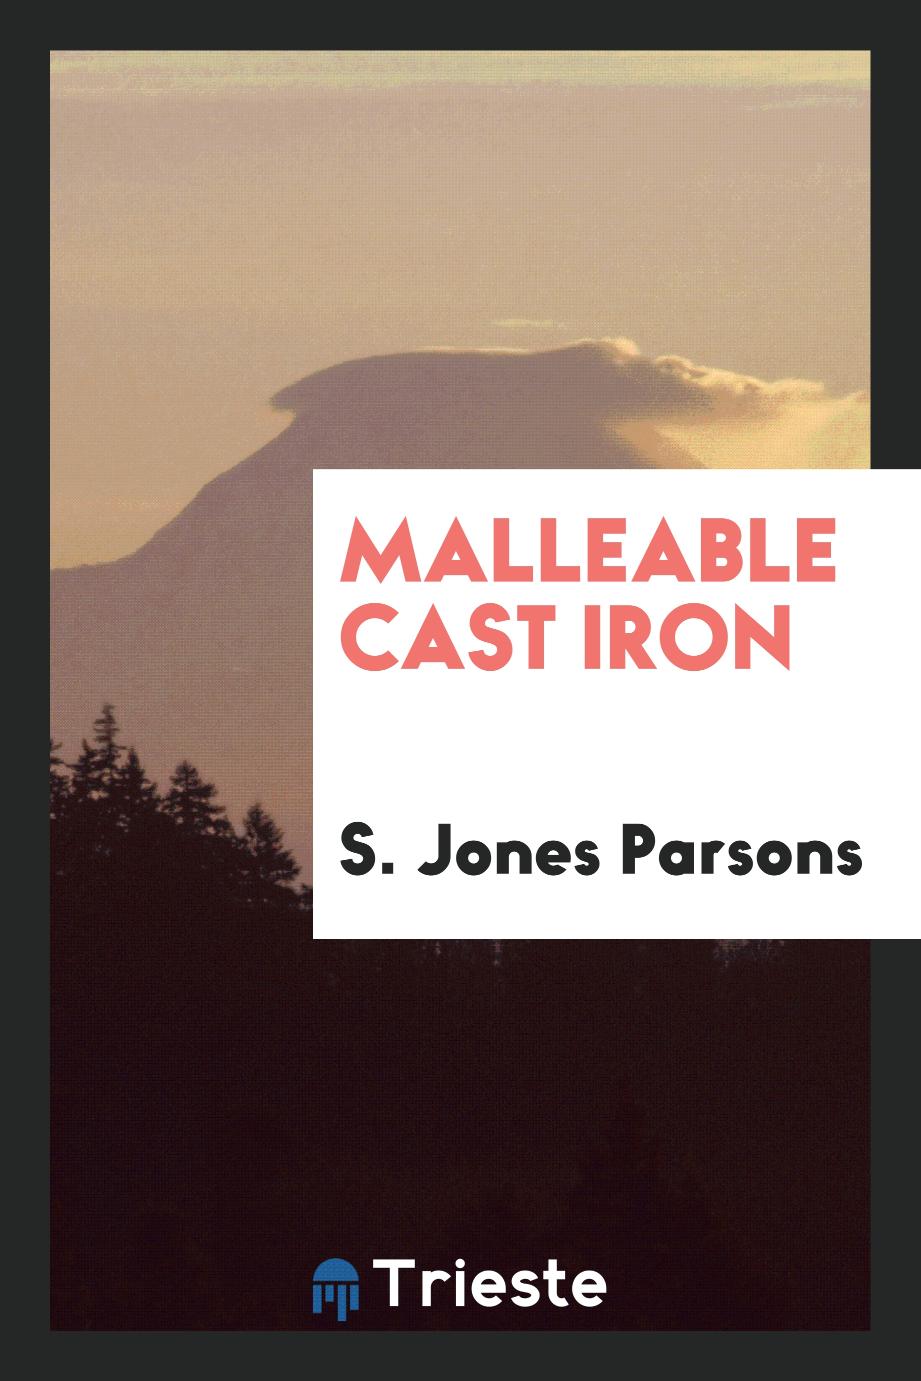 Malleable Cast Iron